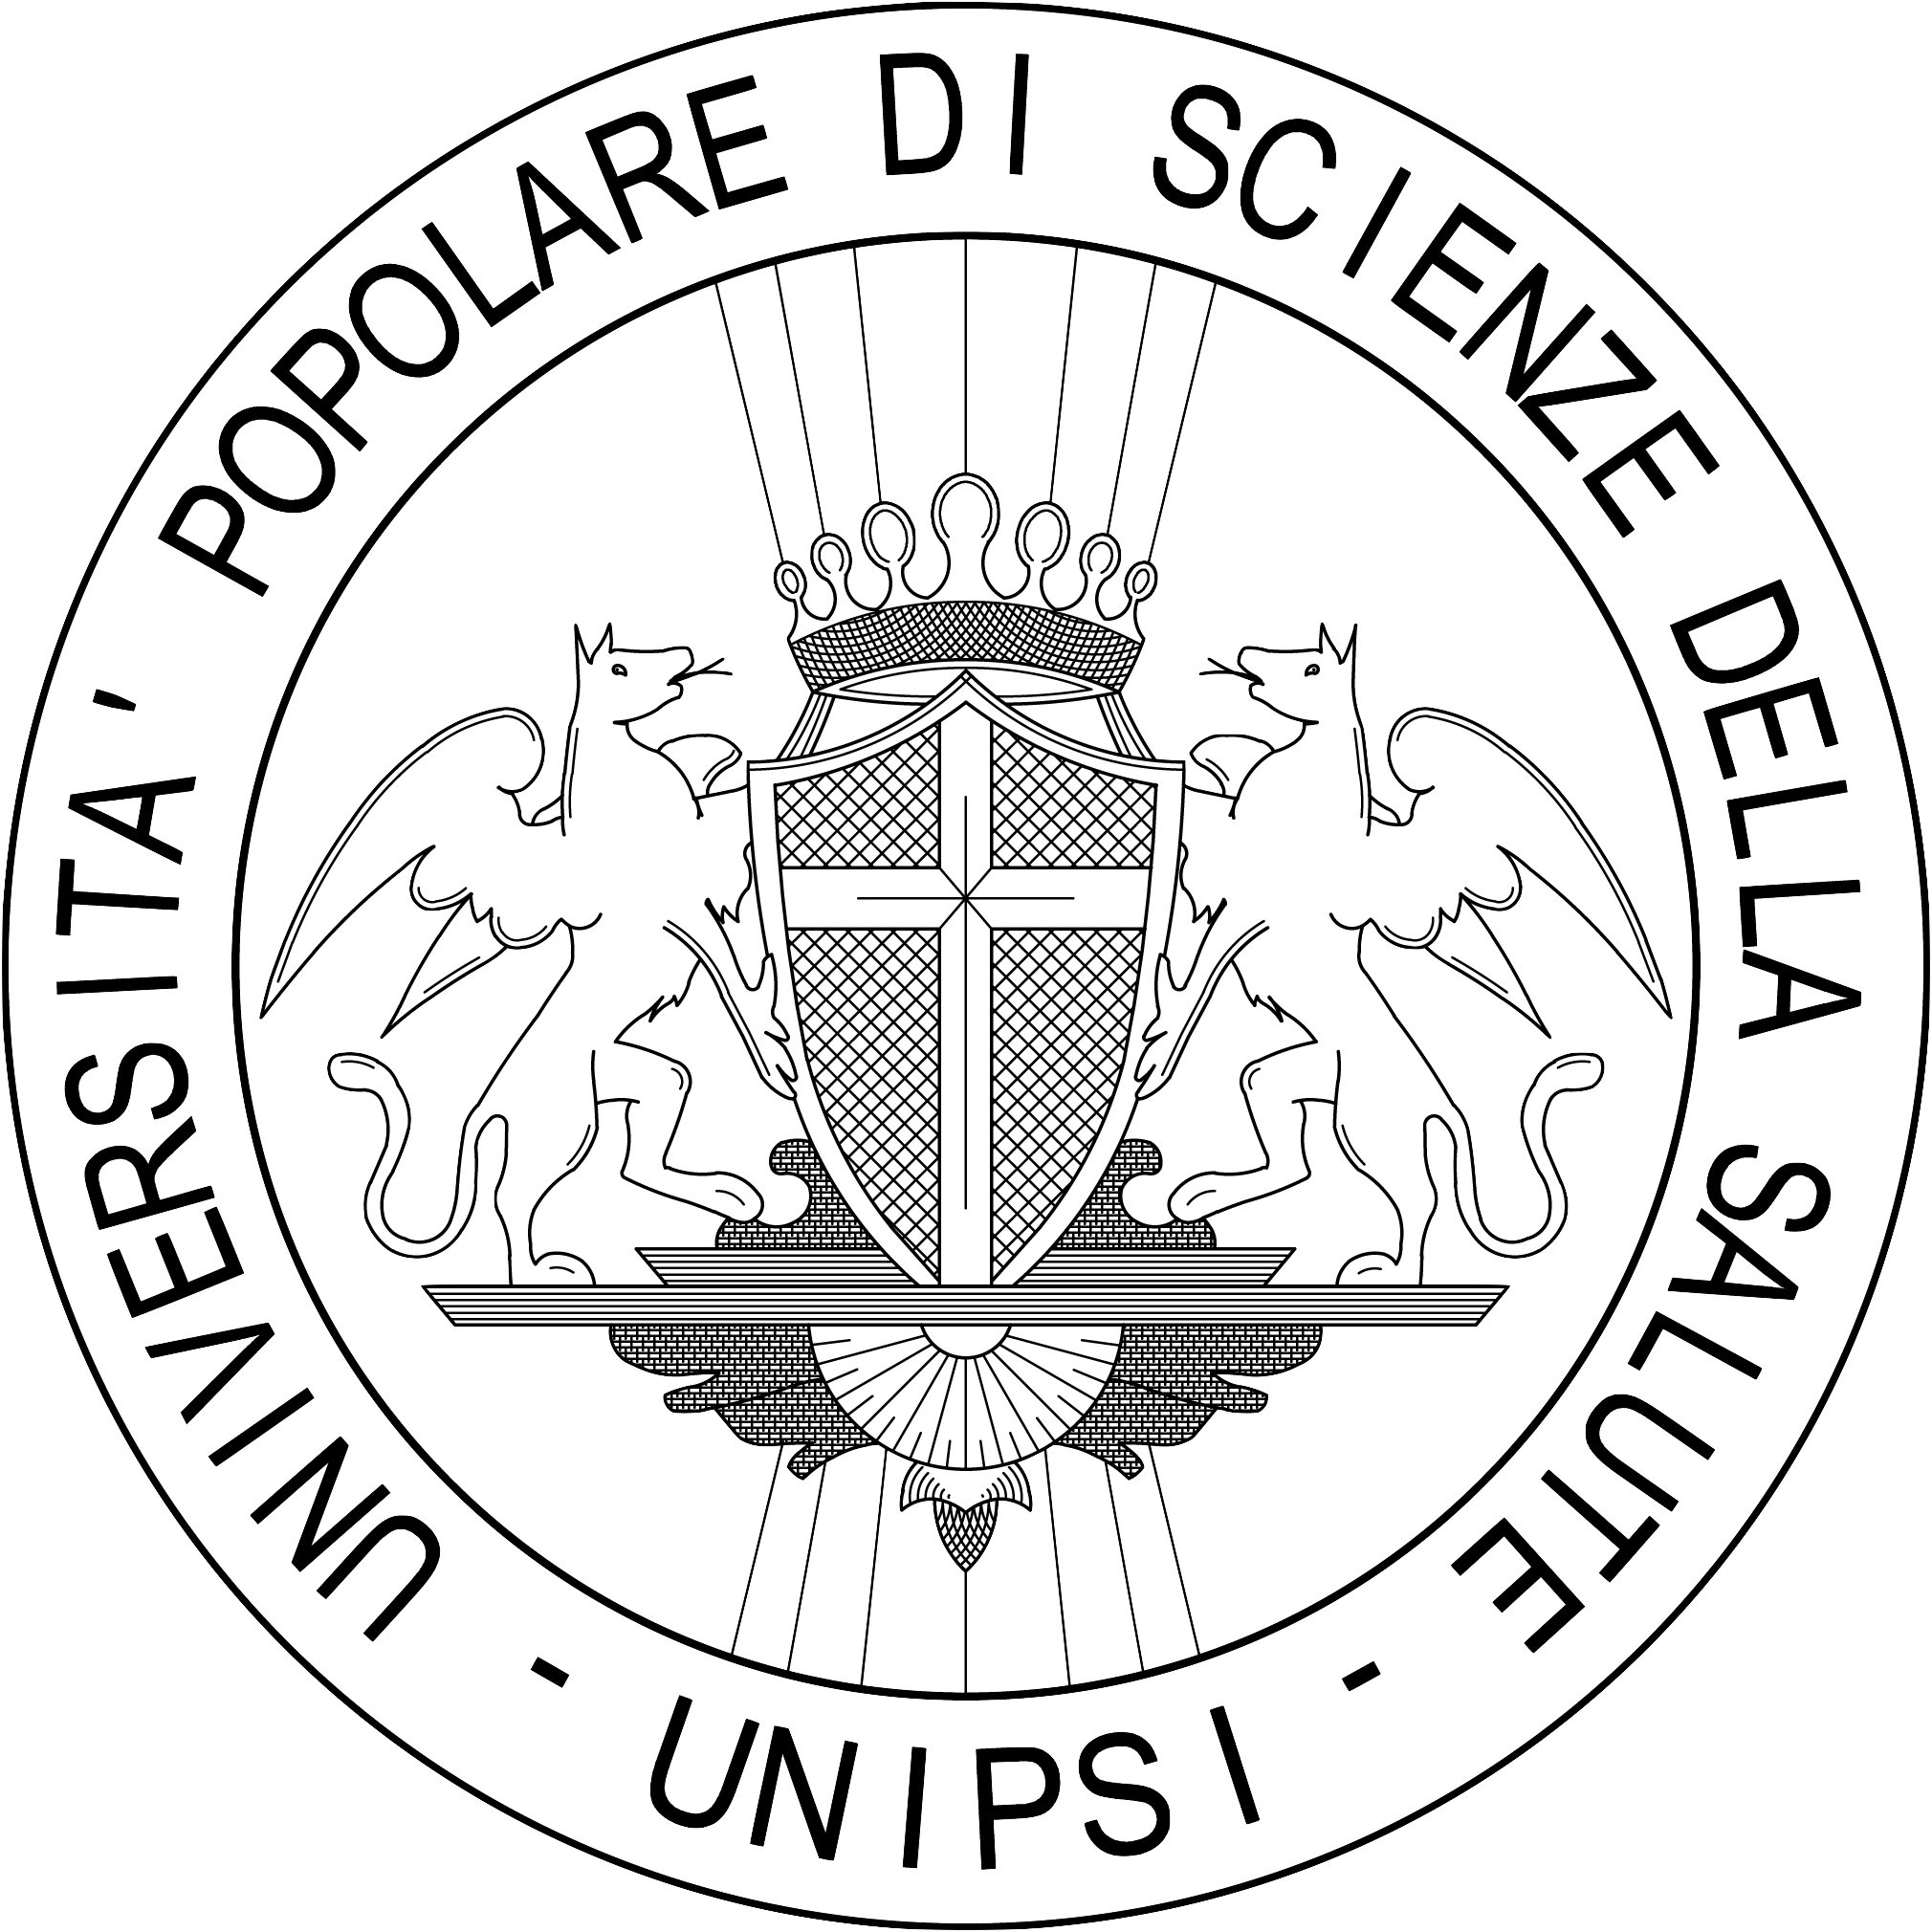 Università Popolare Unipsi